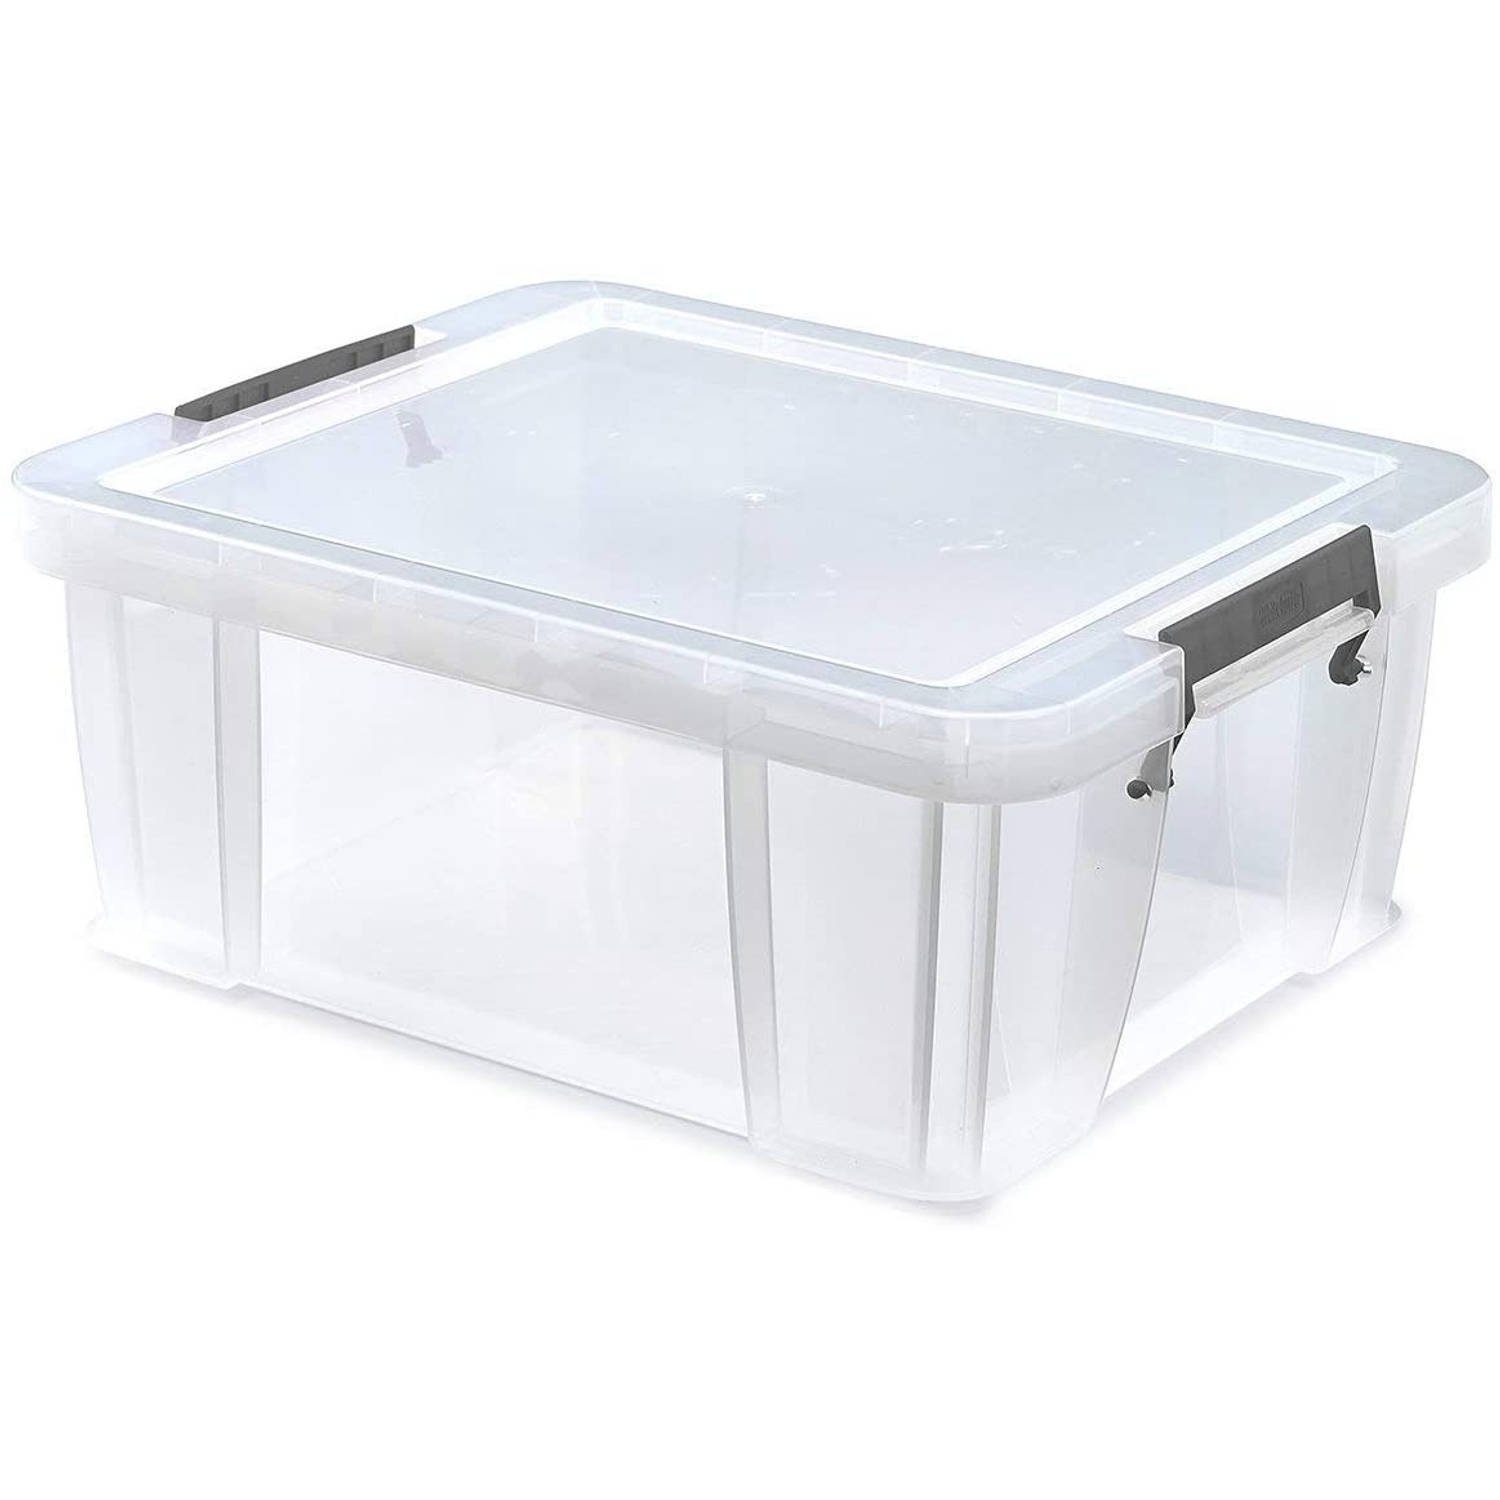 Whitefurze - Allstore Storage Box with Clamps 24 liter